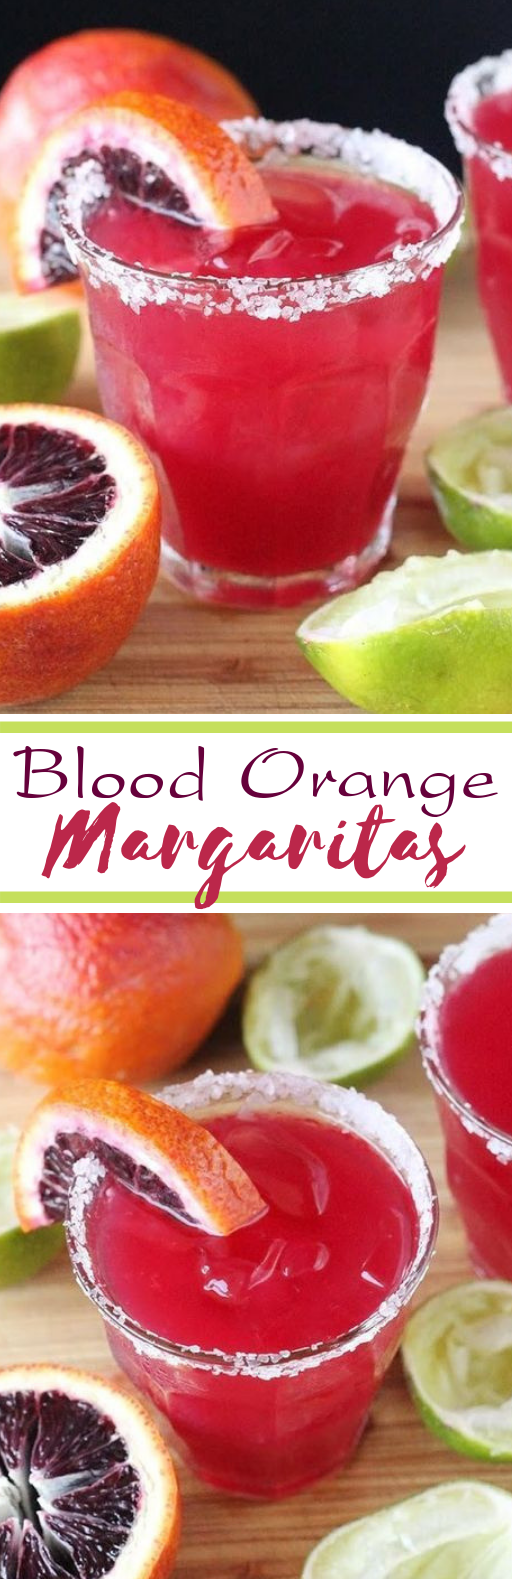 Blood Orange Margaritas #cocktails #margarita